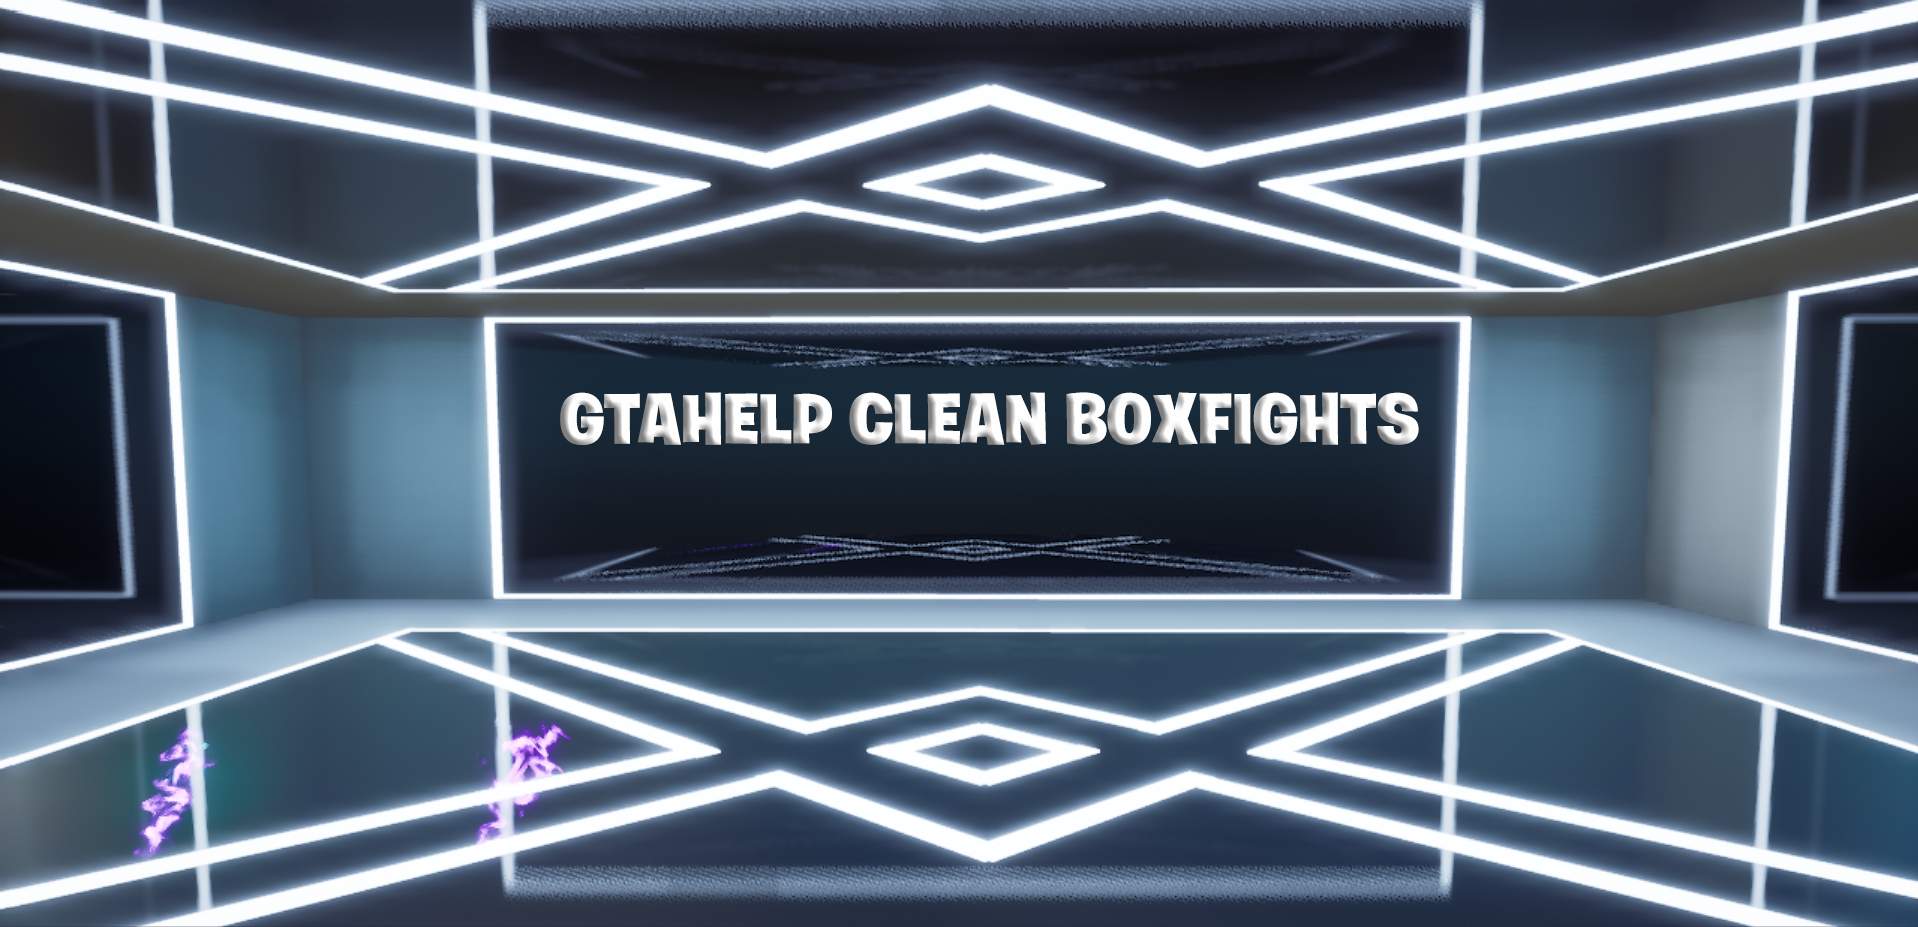 GTAHELP CLEAN BOXFIGHTS